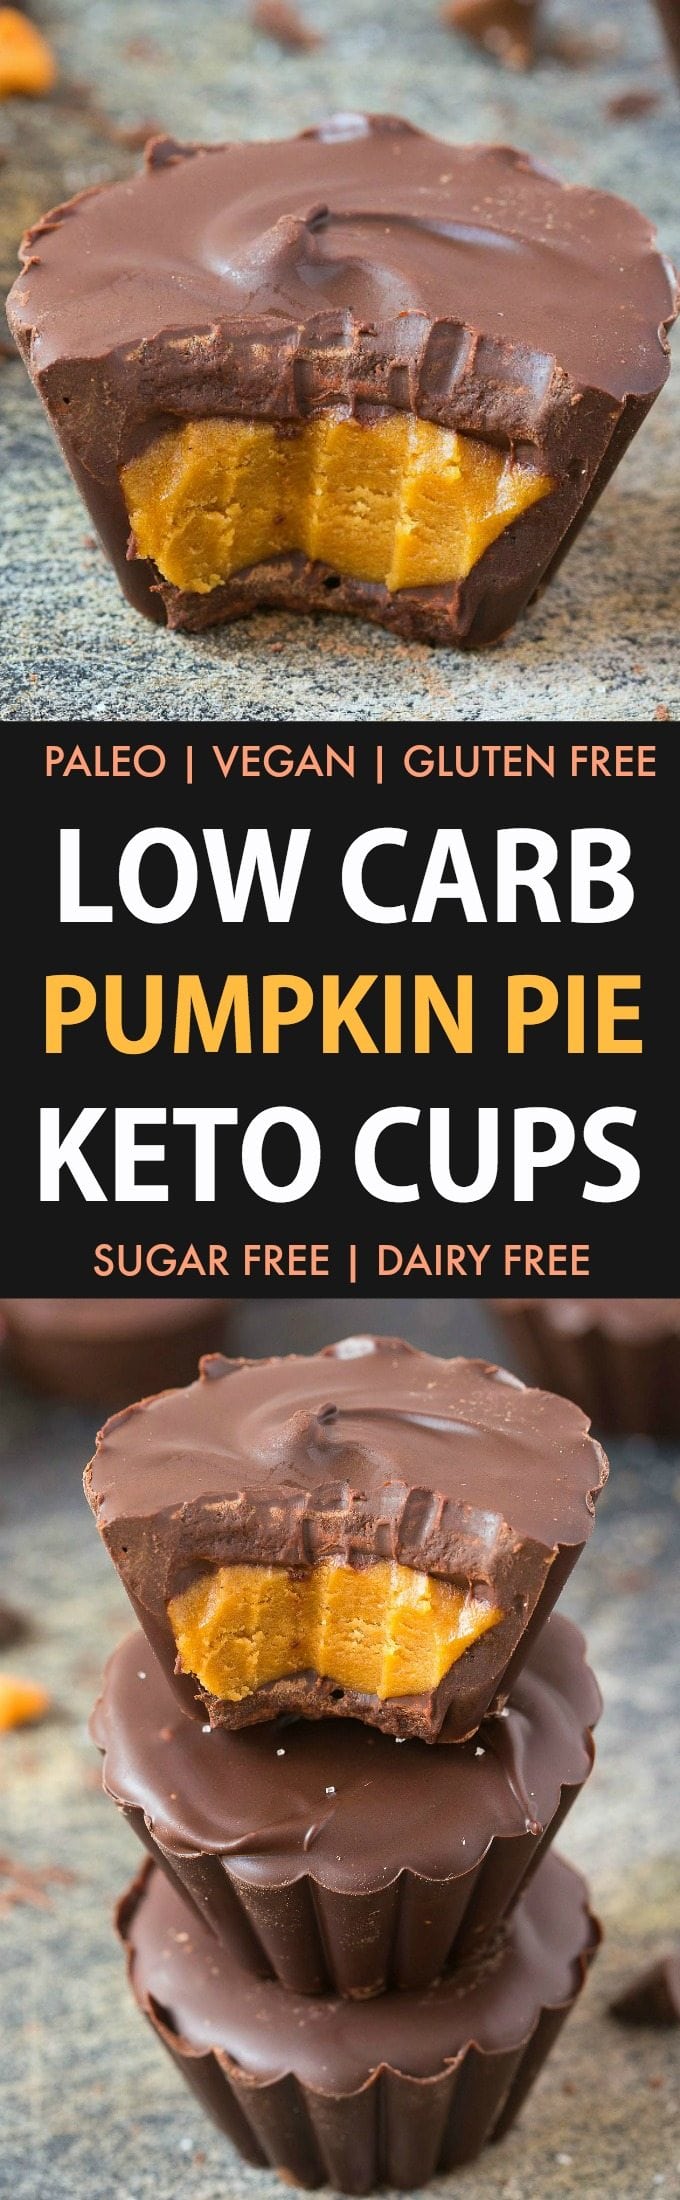  Low Carb Pumpkin Pie Keto Cups (Vegan, Paleo, Gluten Free)- Easy 3-Ingredient homemade pumpkin pie fudge covered in guilt-free chocolate- The ultimate satisfying sweet treat! {v, gf, p recipe}- thebigmansworld.com #keto #ketodessert #fatbomb 